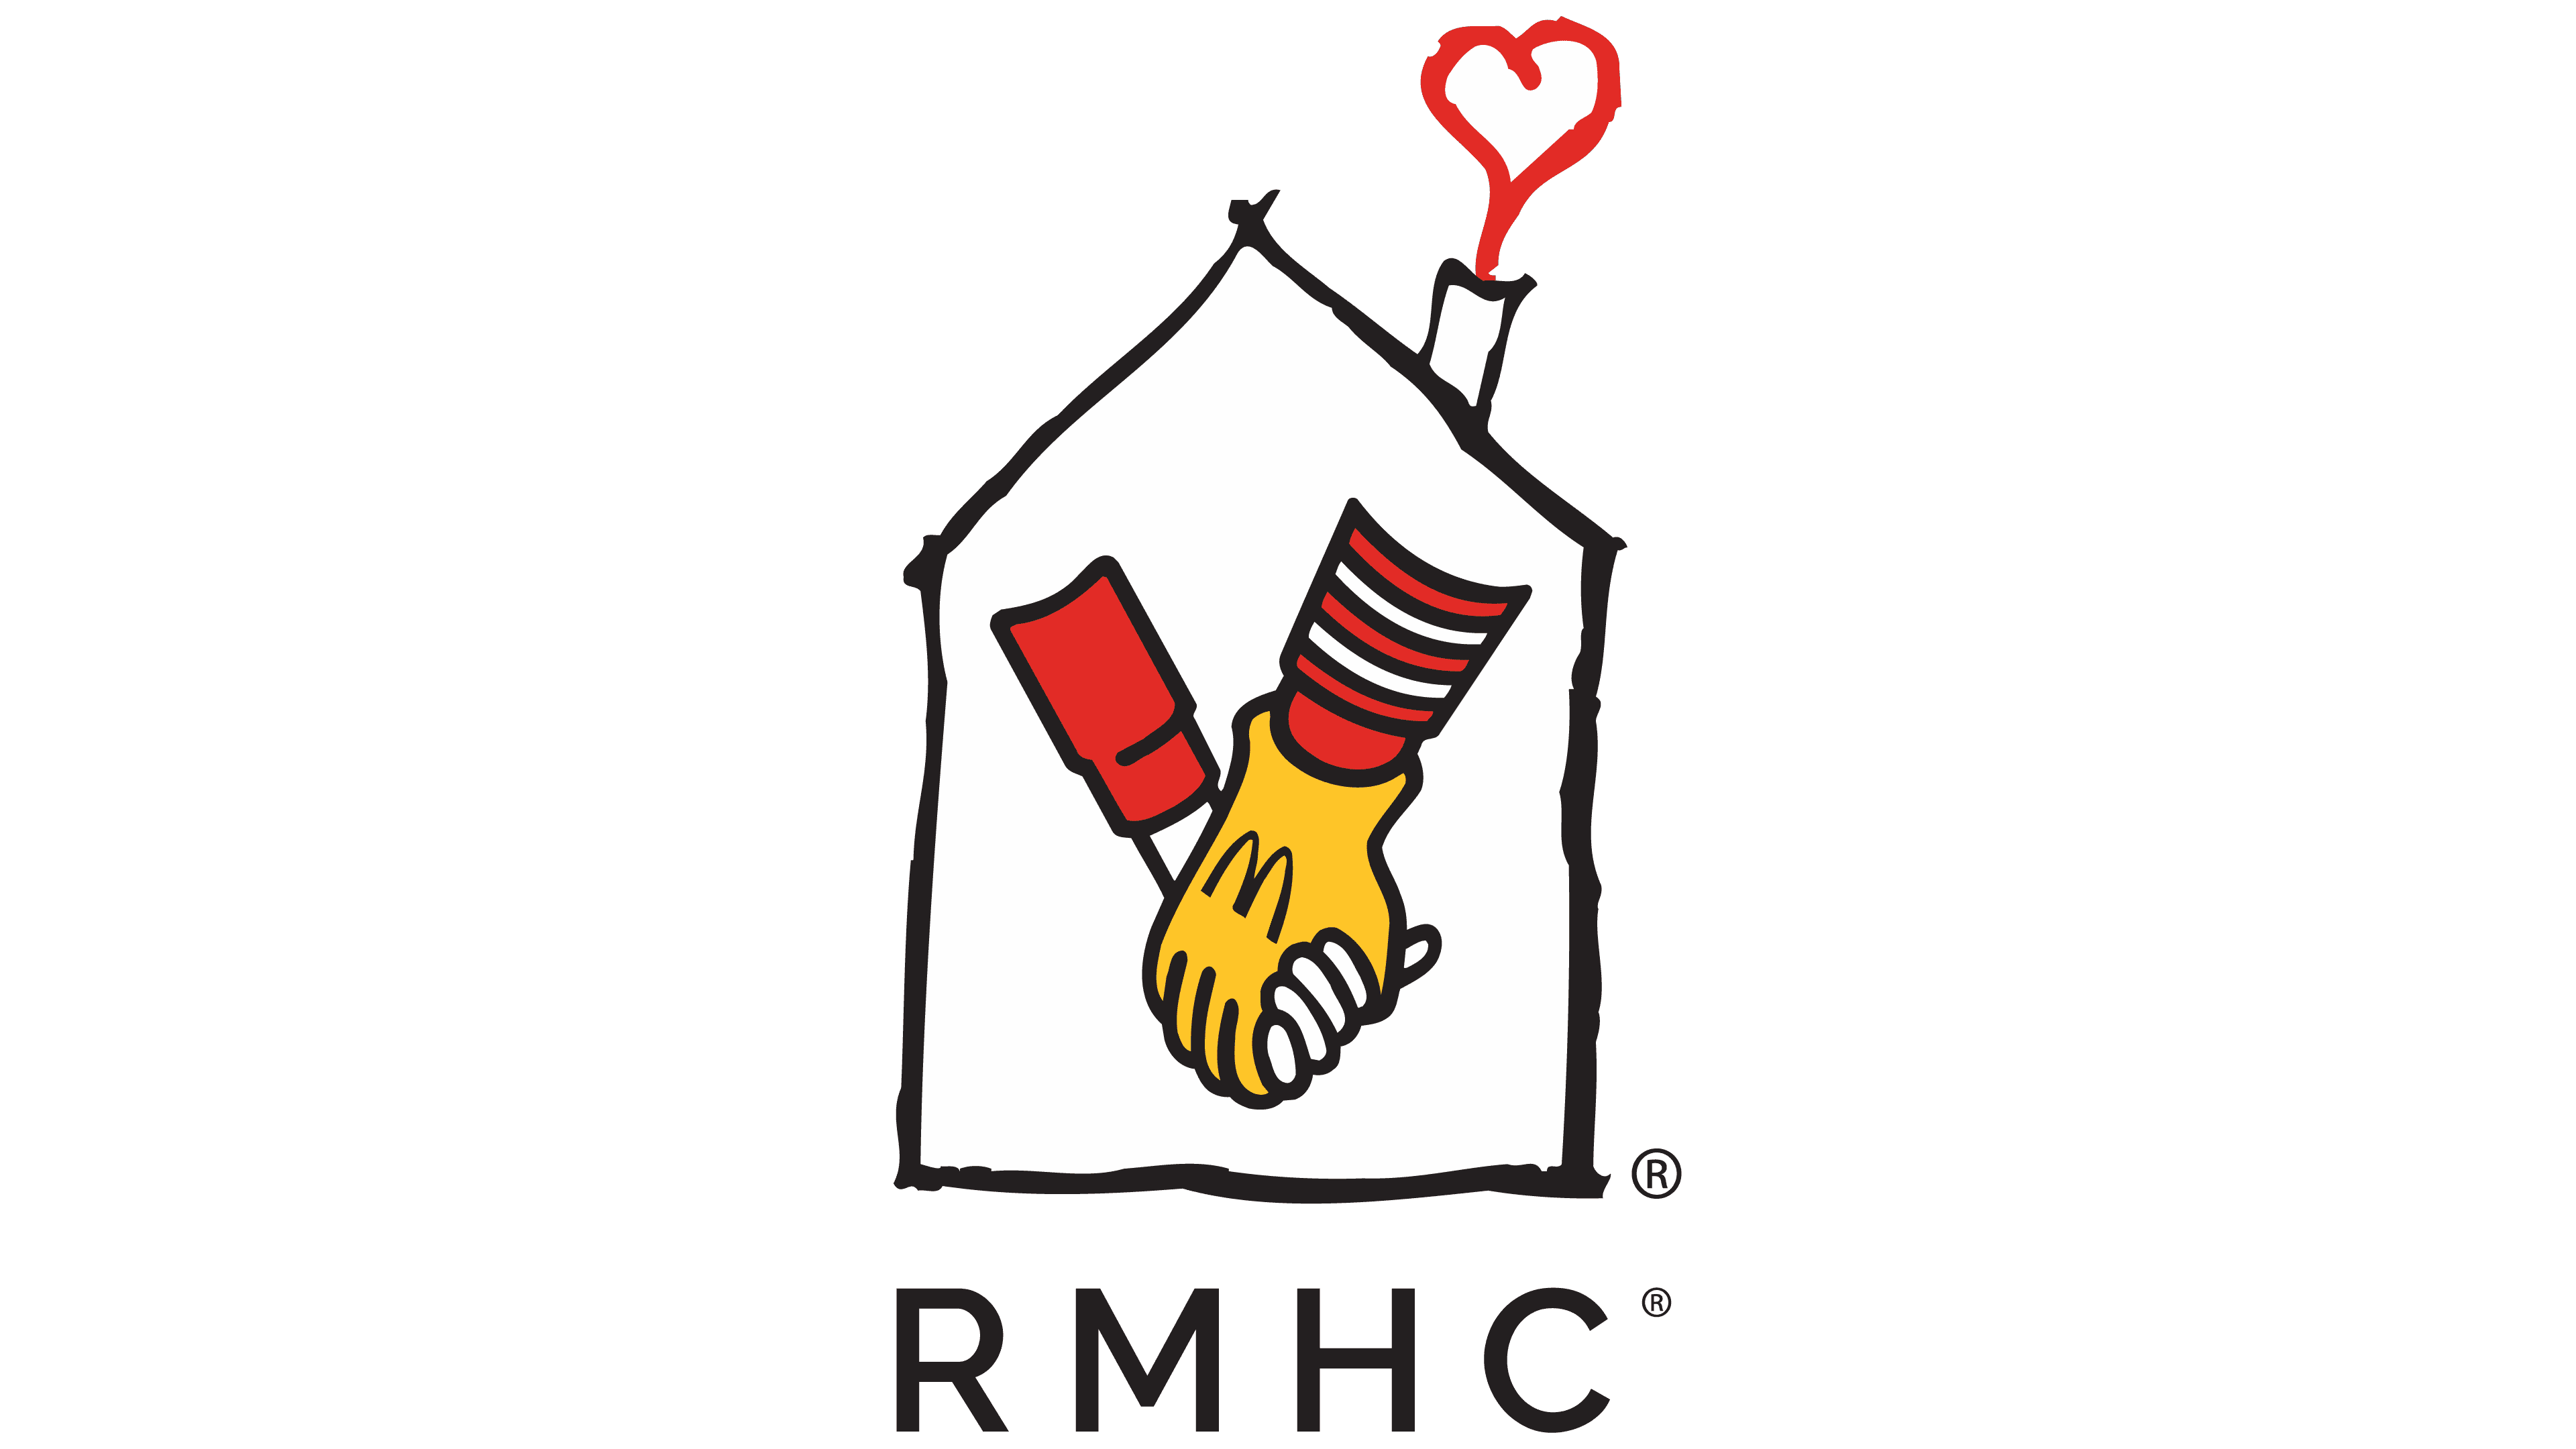 Ronald-McDonald-House-Charities-logo